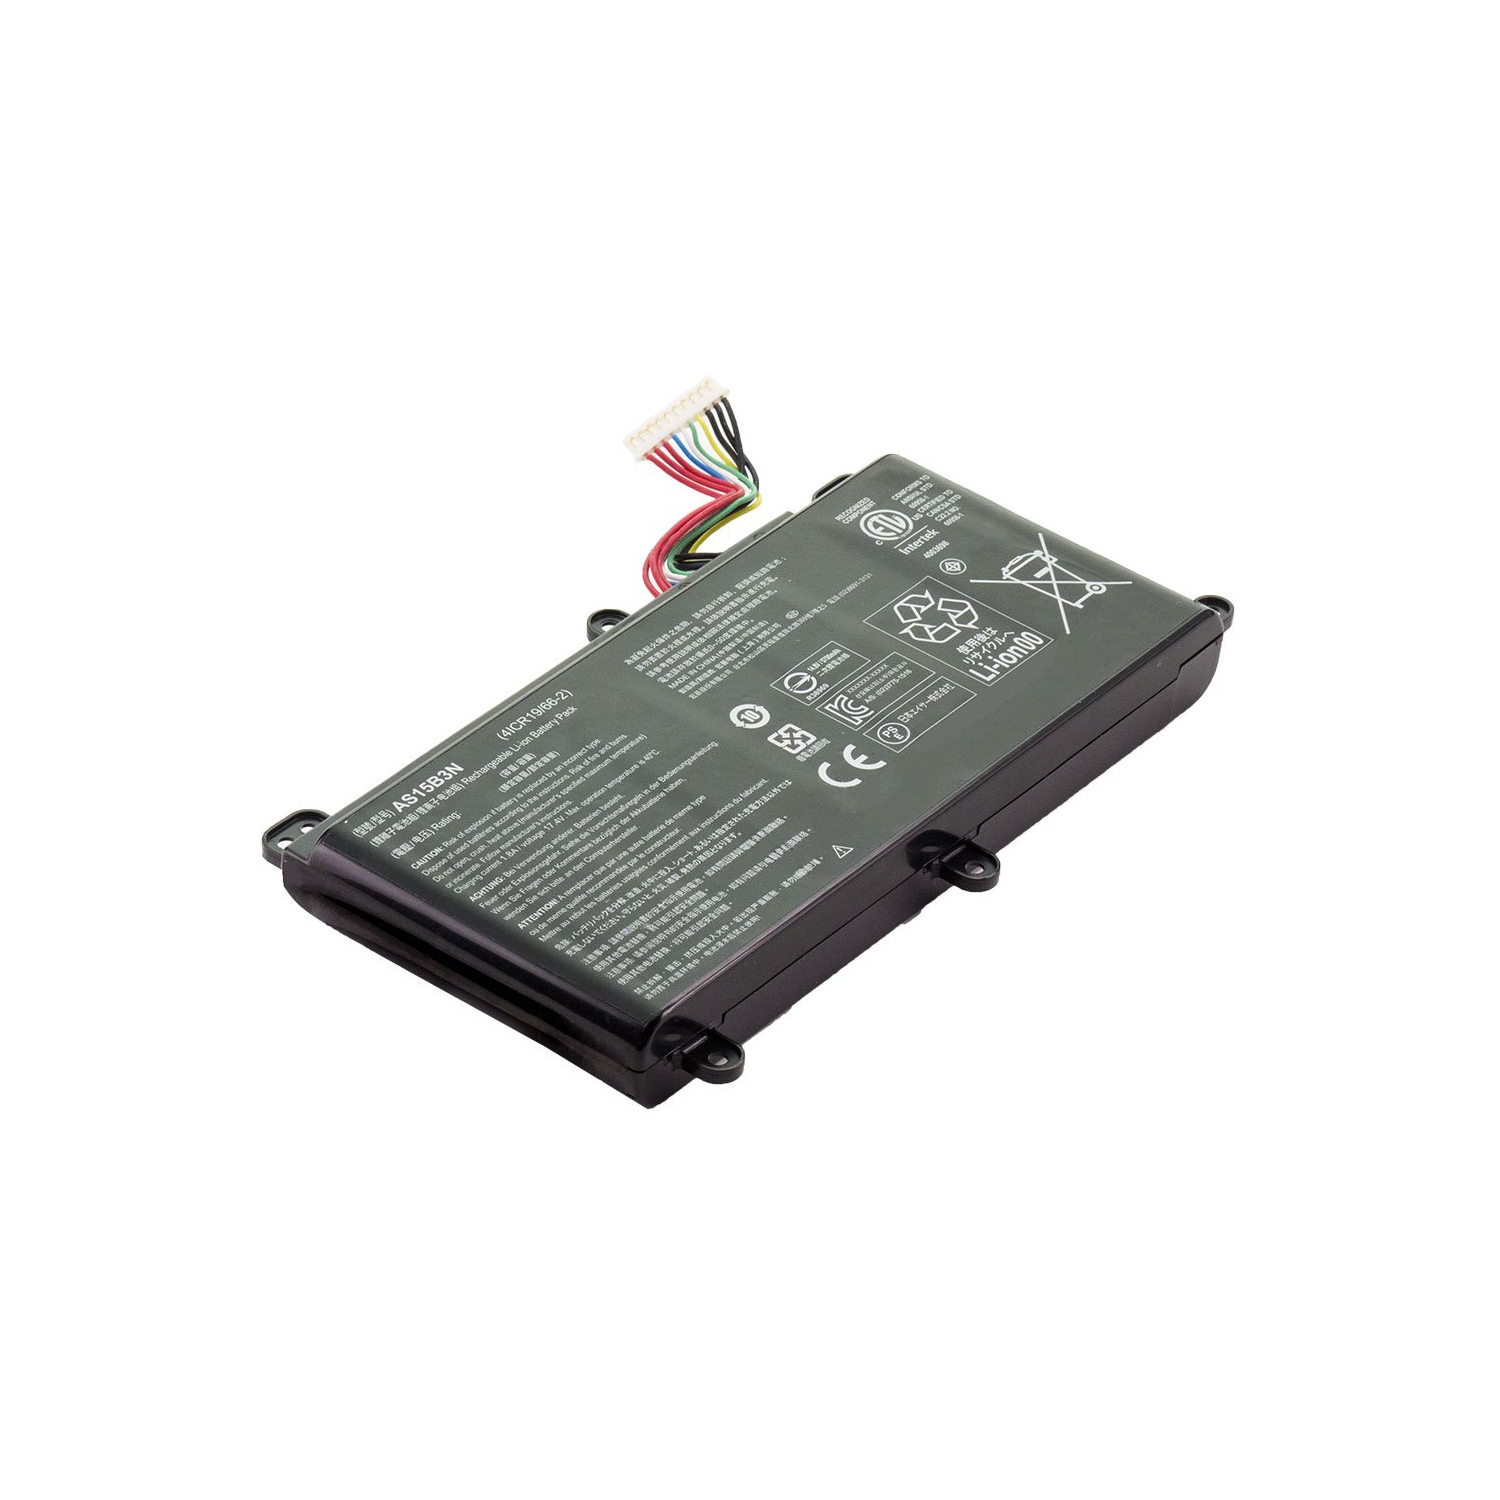 Laptop Battery Replacement for Acer Predator 17 G9-793-79V5, AS15B3N, KT.00803.004, KT.00803.005